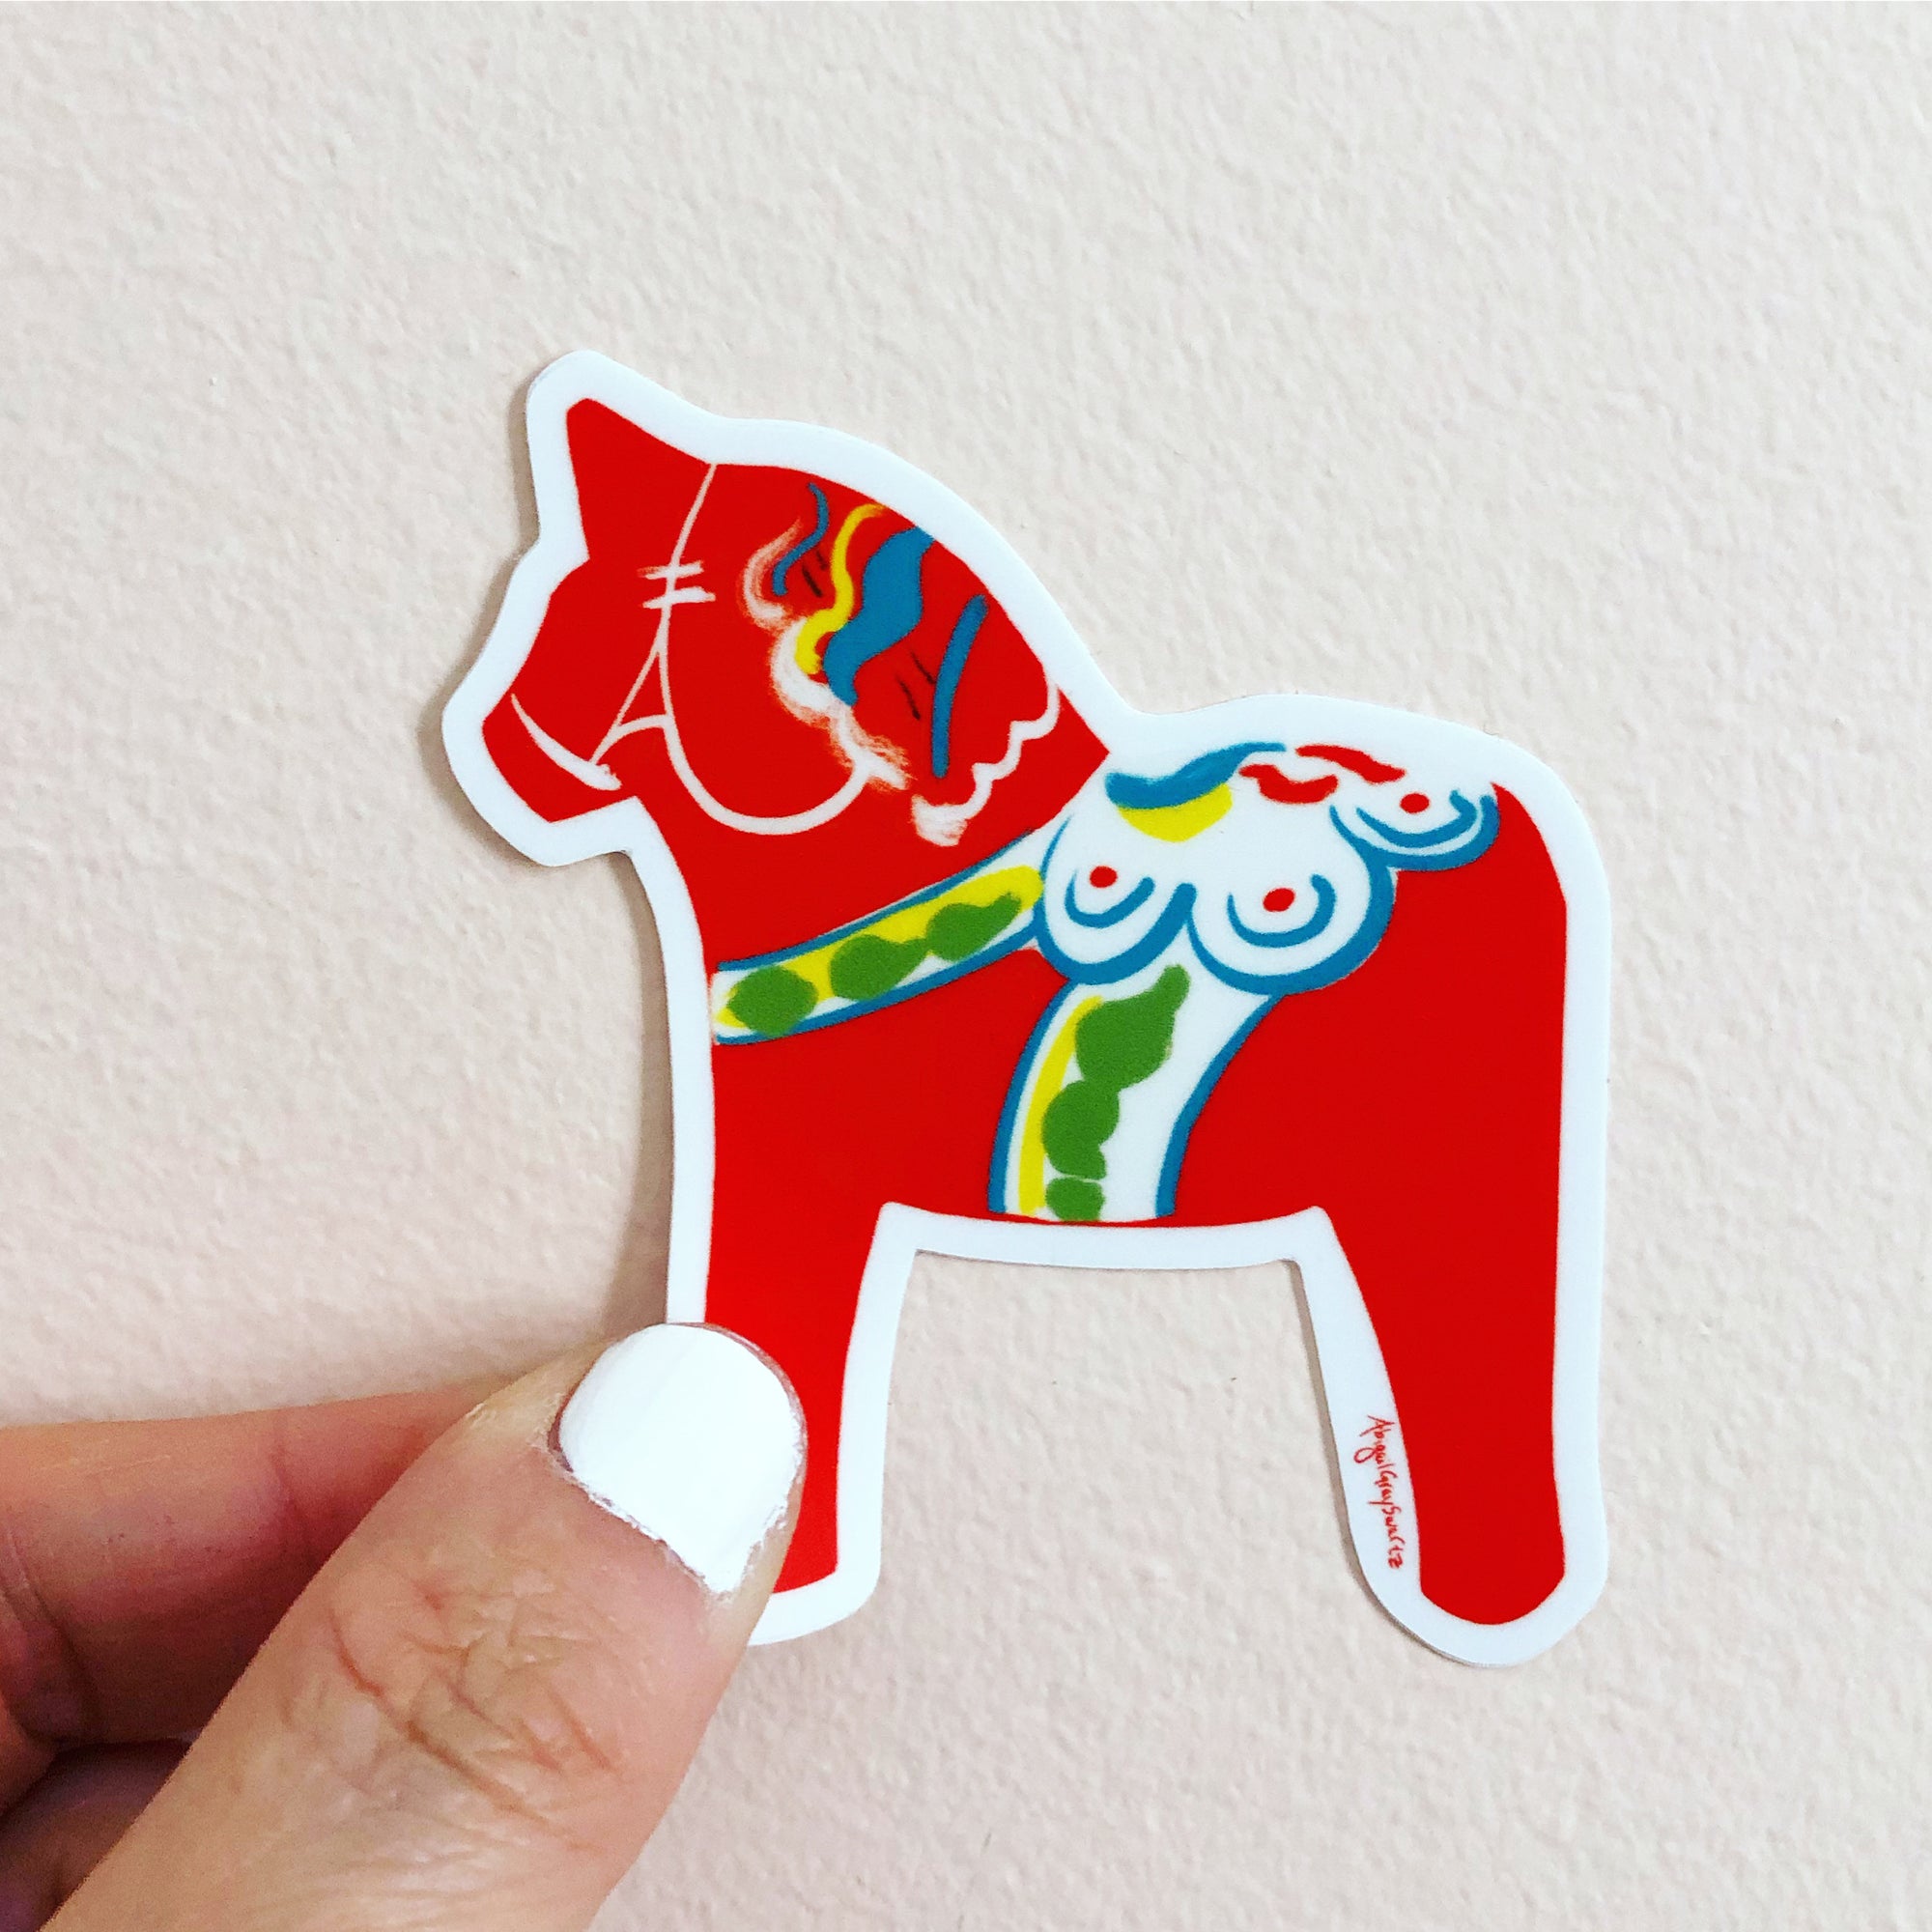 Dala horse sticker, swedish sticker by Abigail Gray Swartz